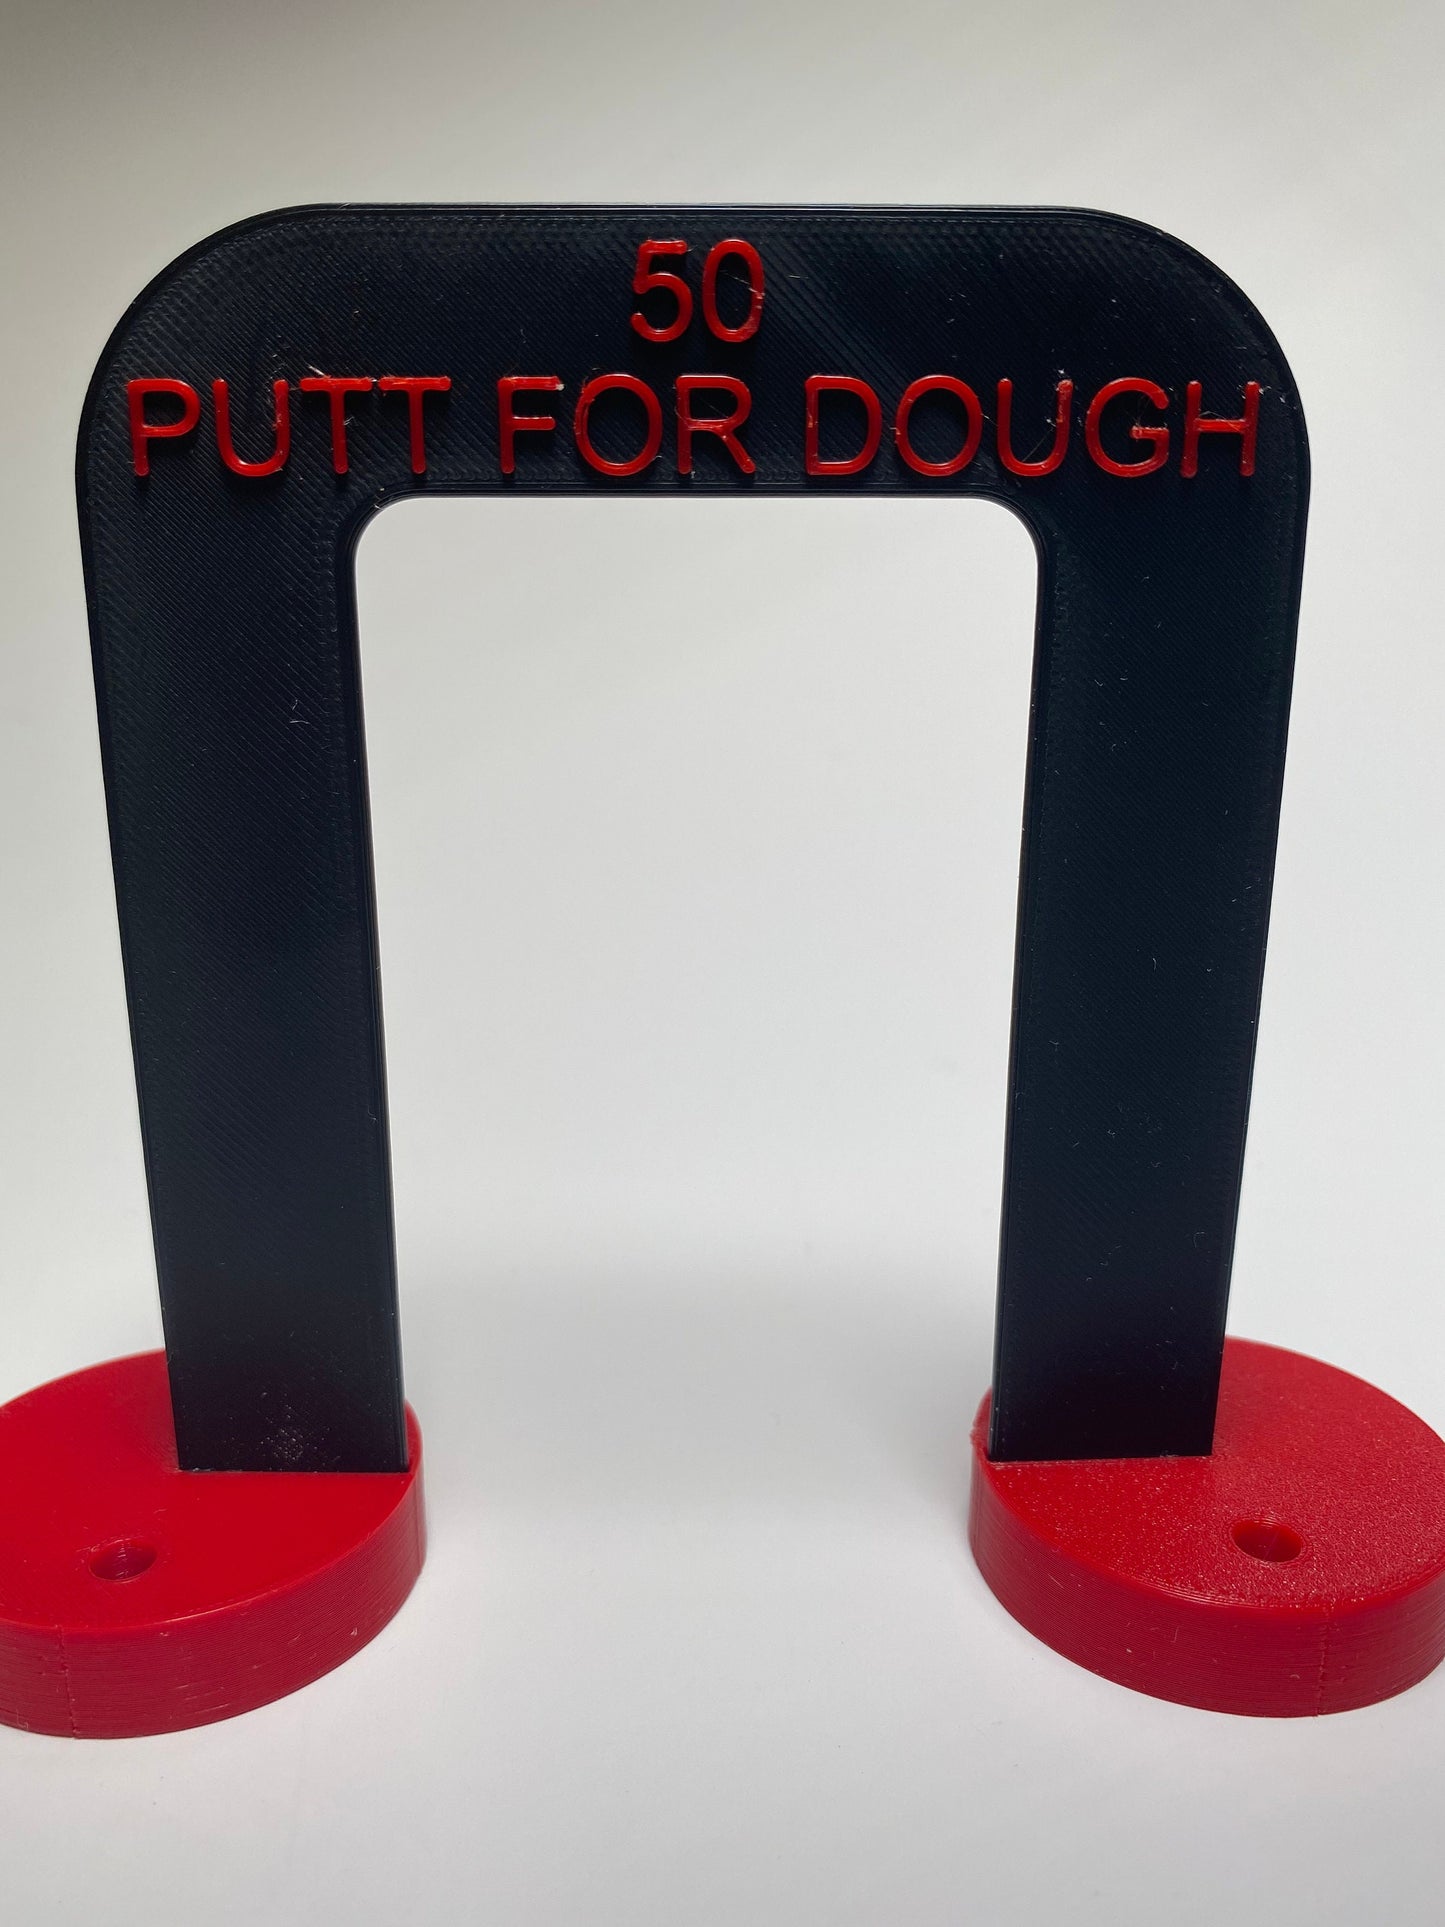 Golf Training Gates  (Set of 3) - 3D Printed